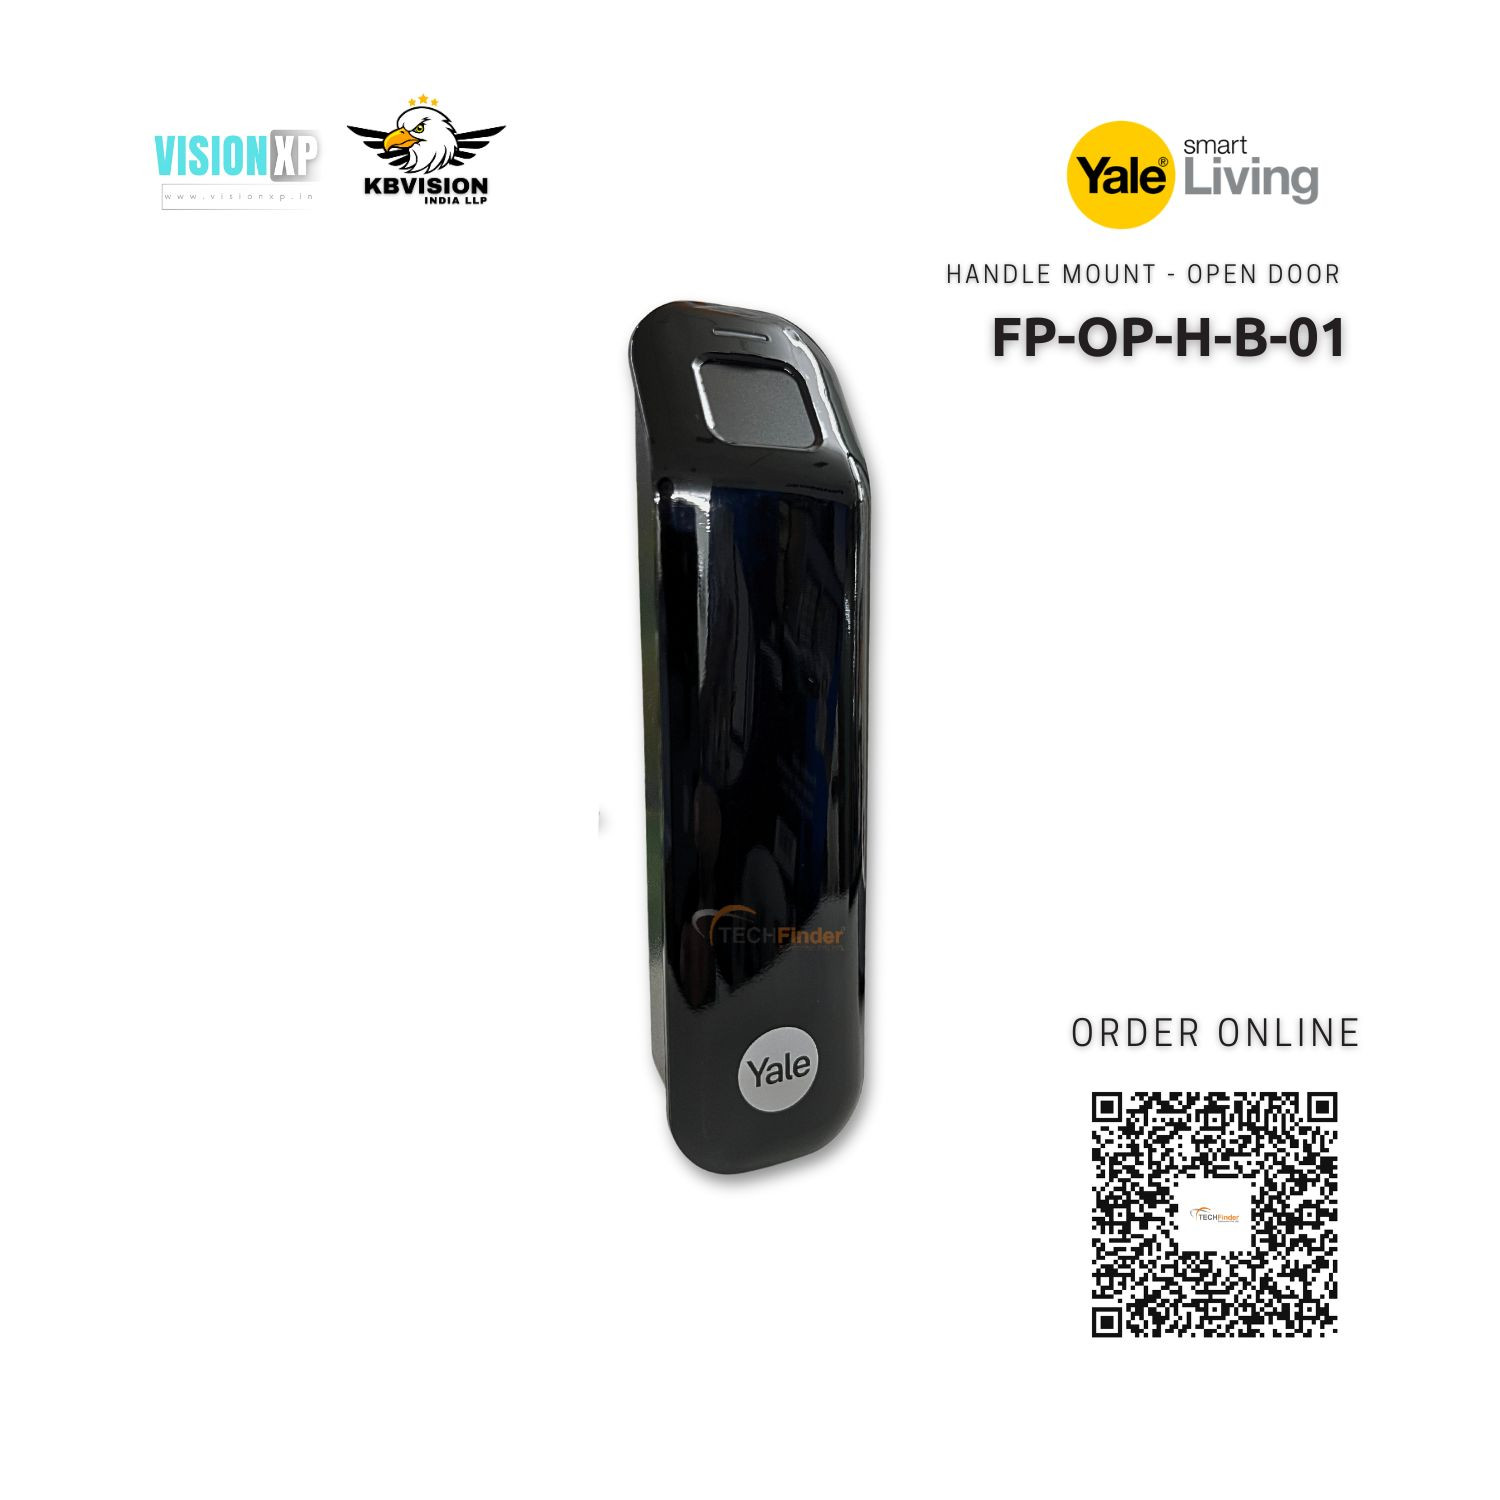 Yale FP-OP-H-B-01 Fingerprint Wardrobe Handle Lock for Openable Door